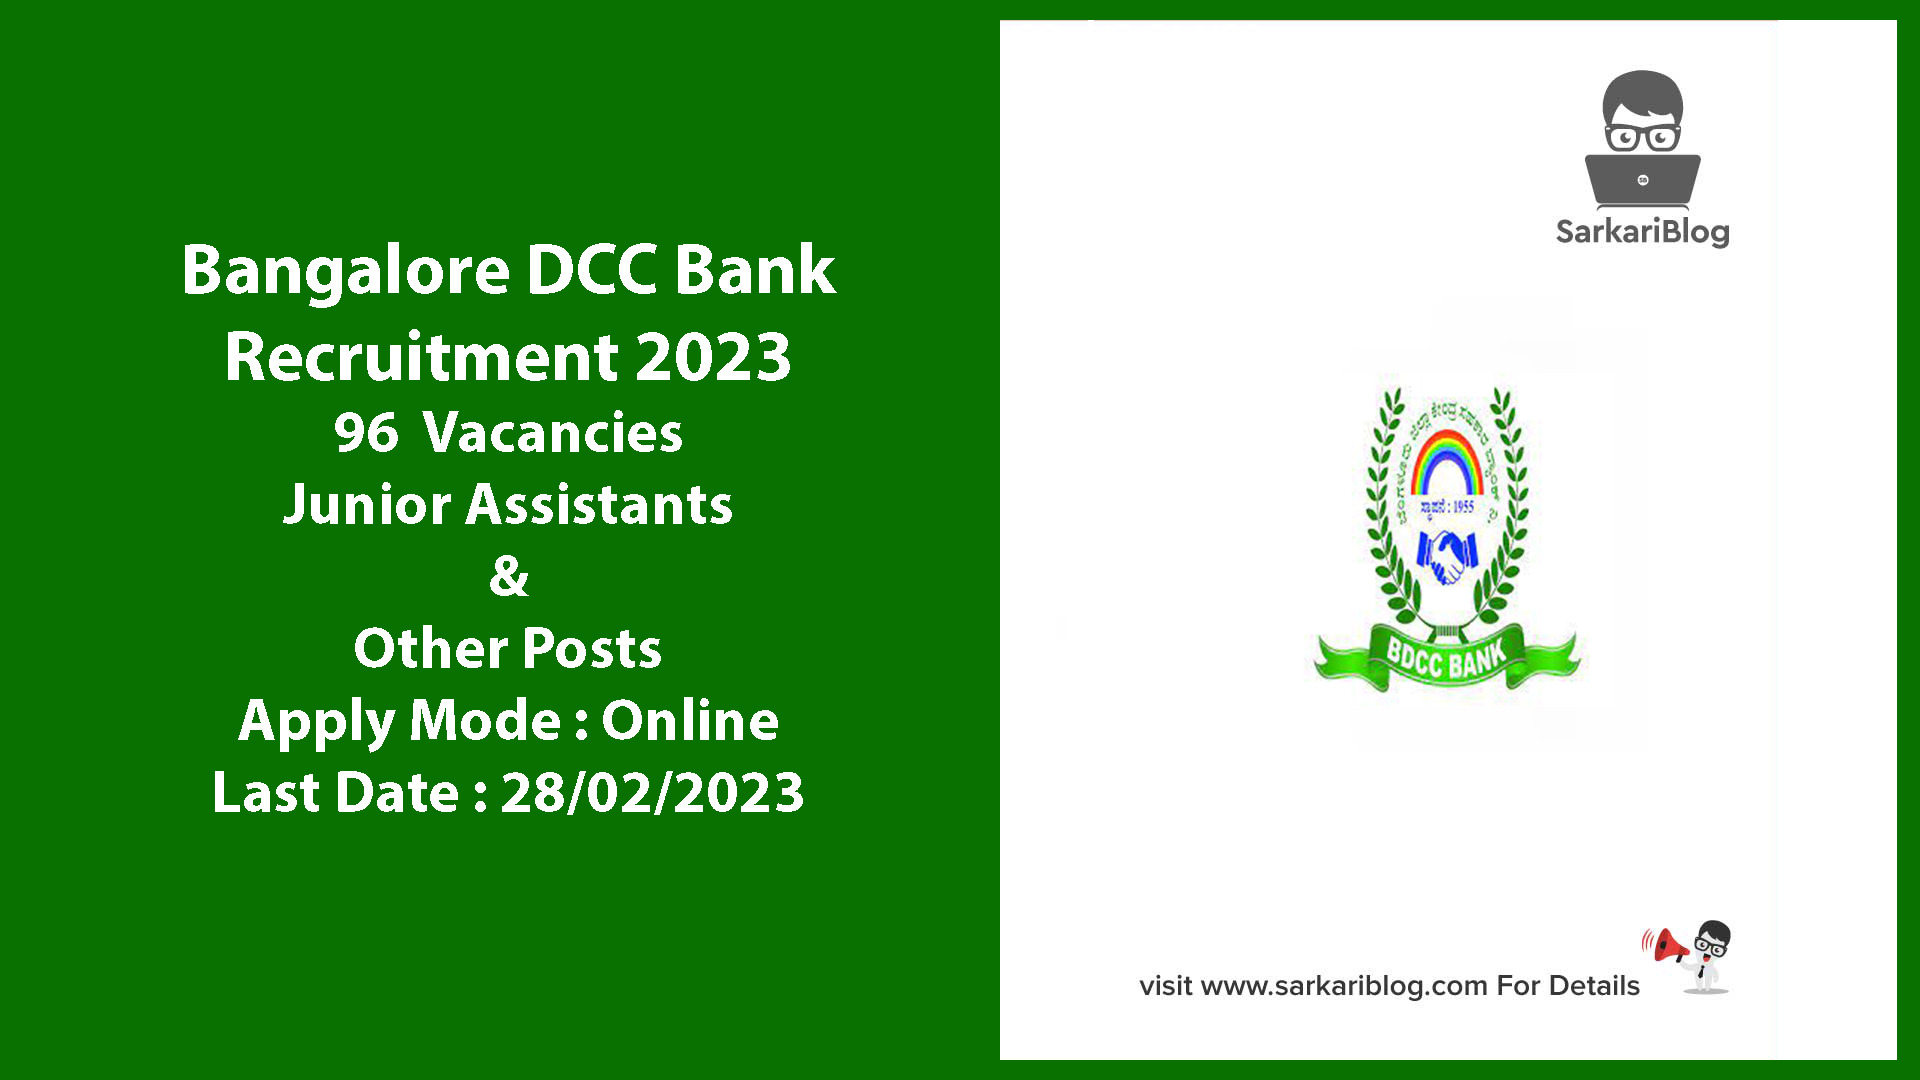 Bangalore DCC Bank Recruitment 2023